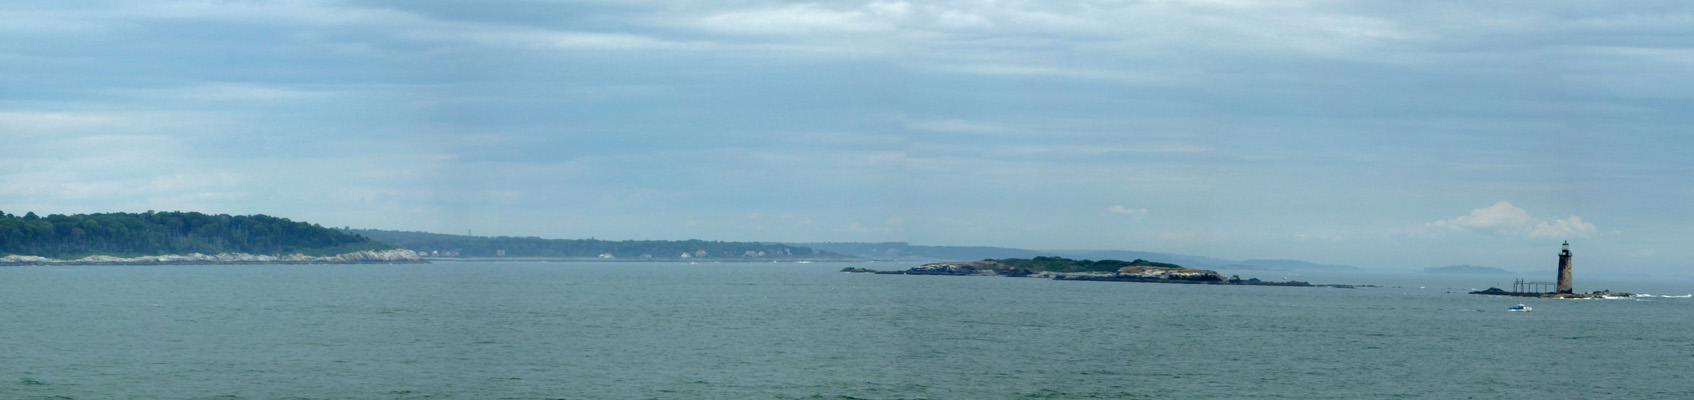 Portland Maine Harbor